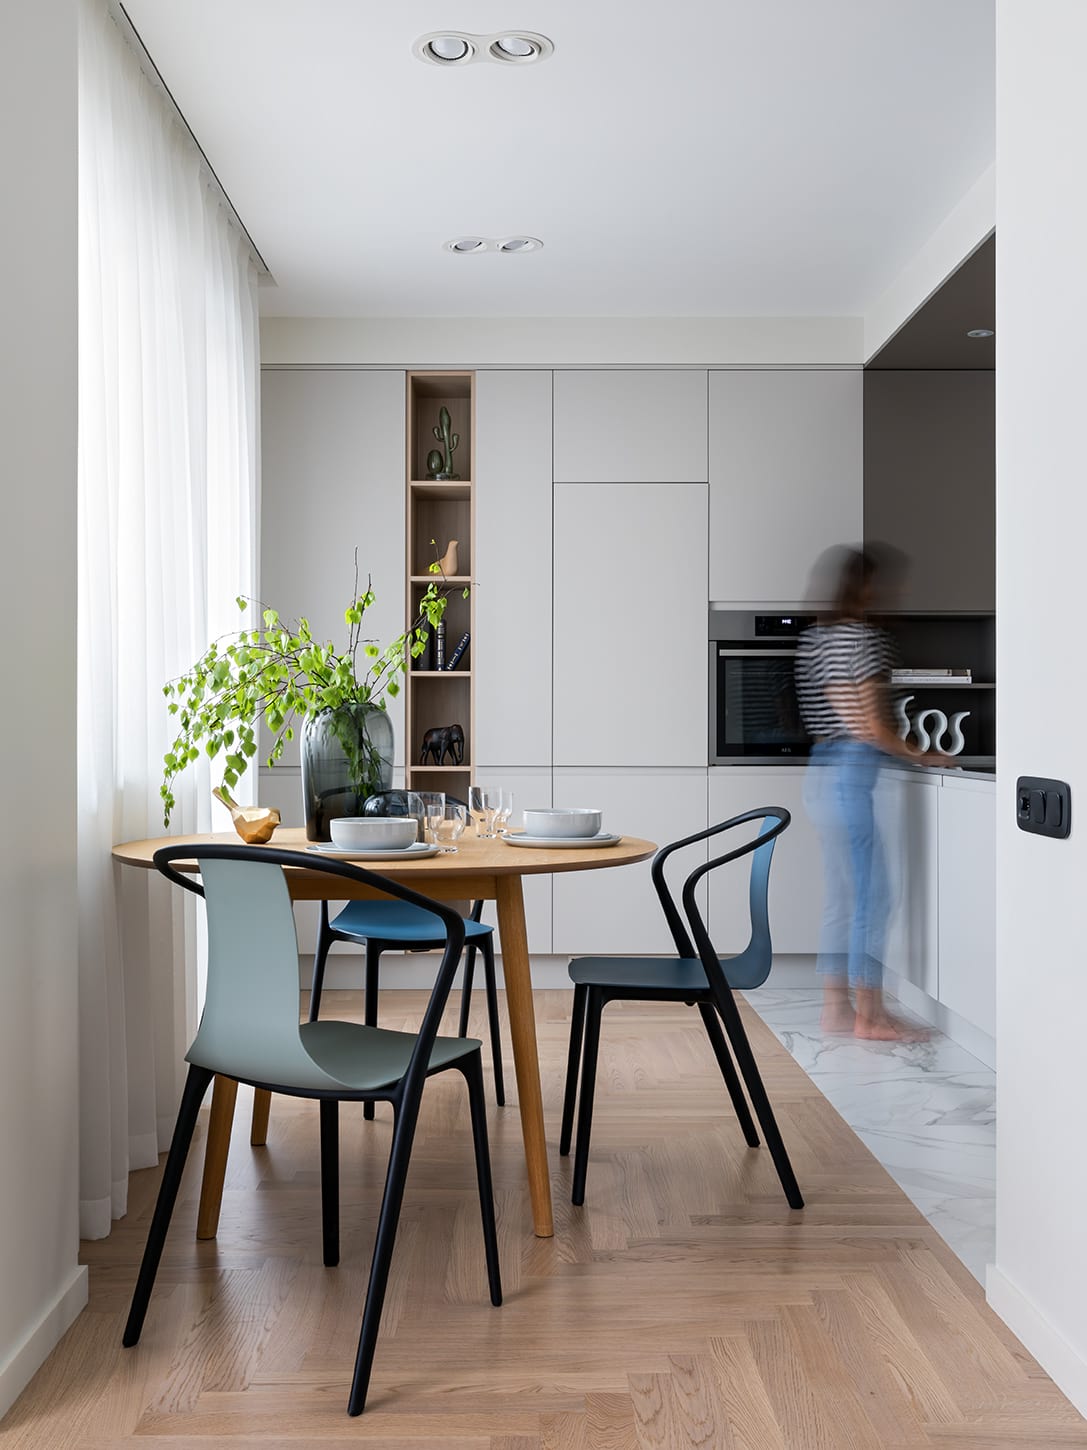 Apartment designed by Kristina Varkina. Boen hardwood flooring